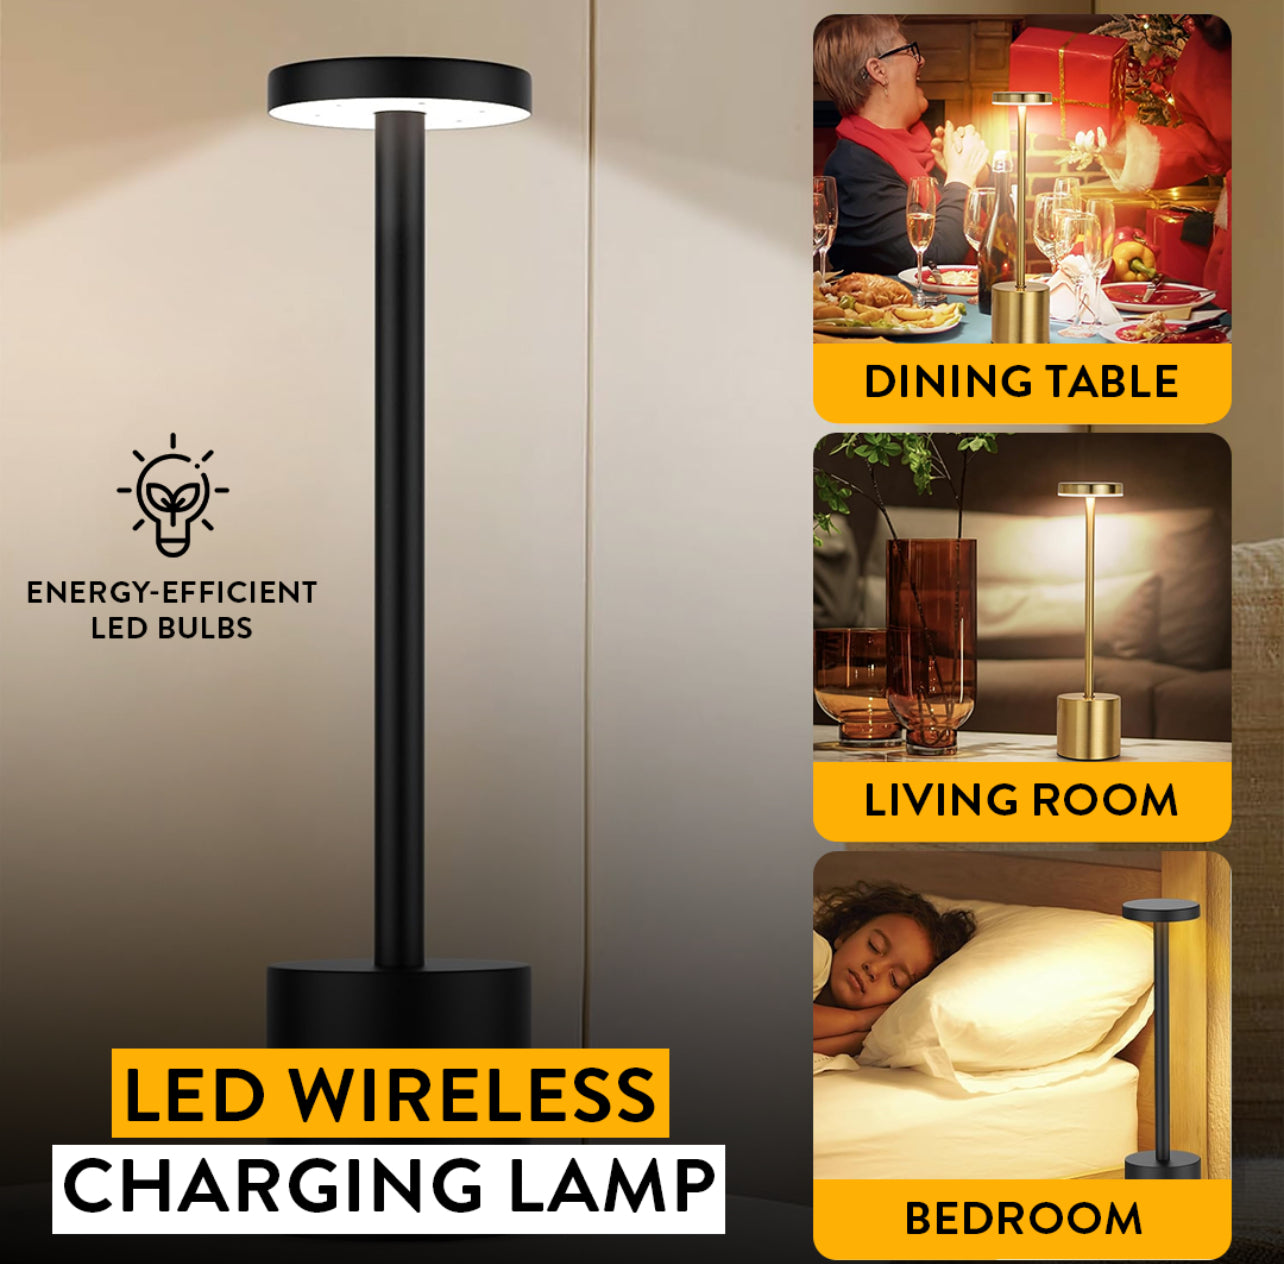 LED Wireless Charging Lamp